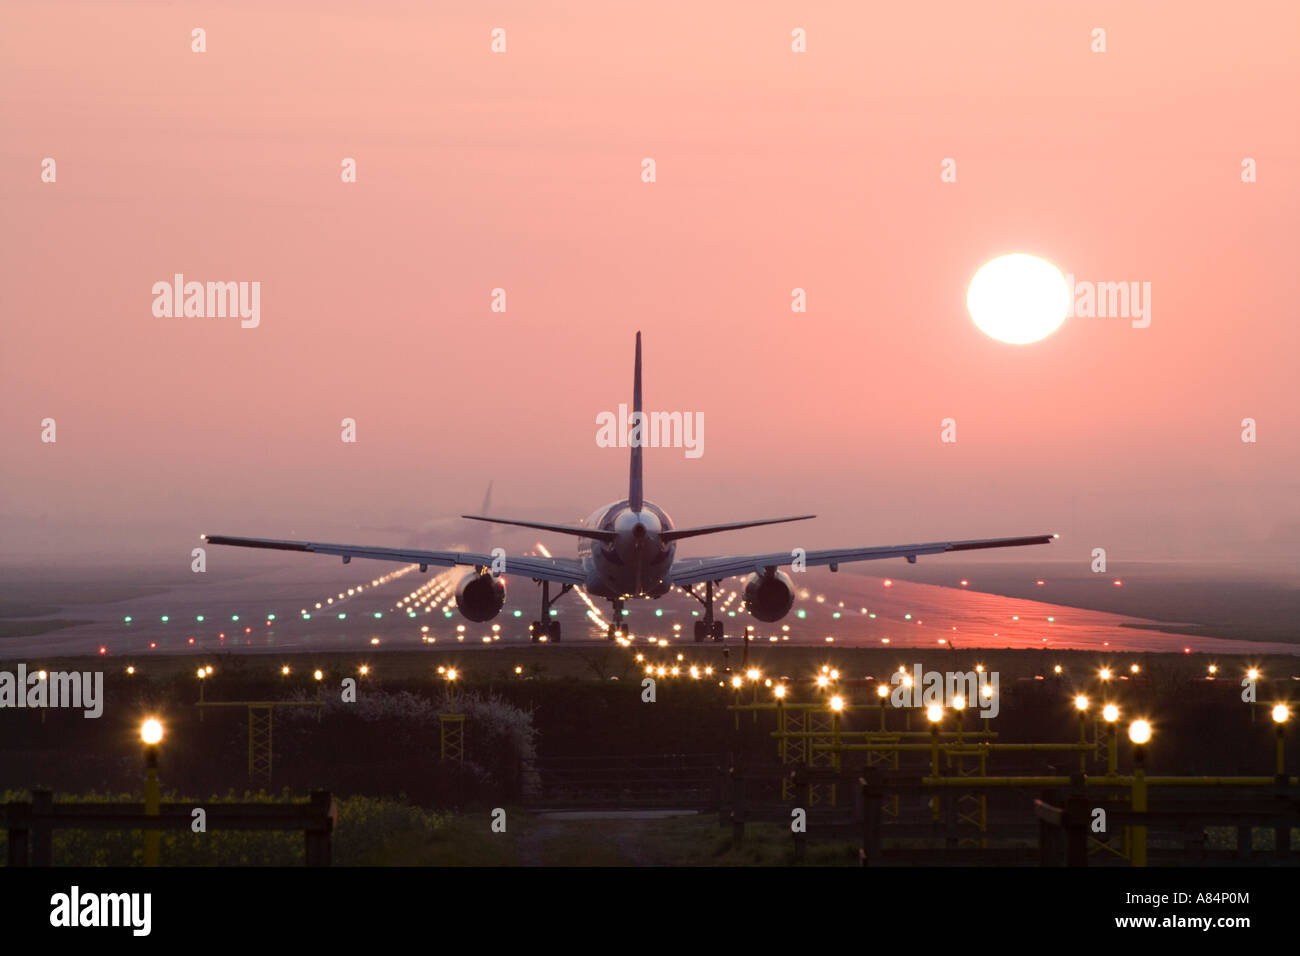 Aeroplane awaiting takeoff on runway. Stock Photo